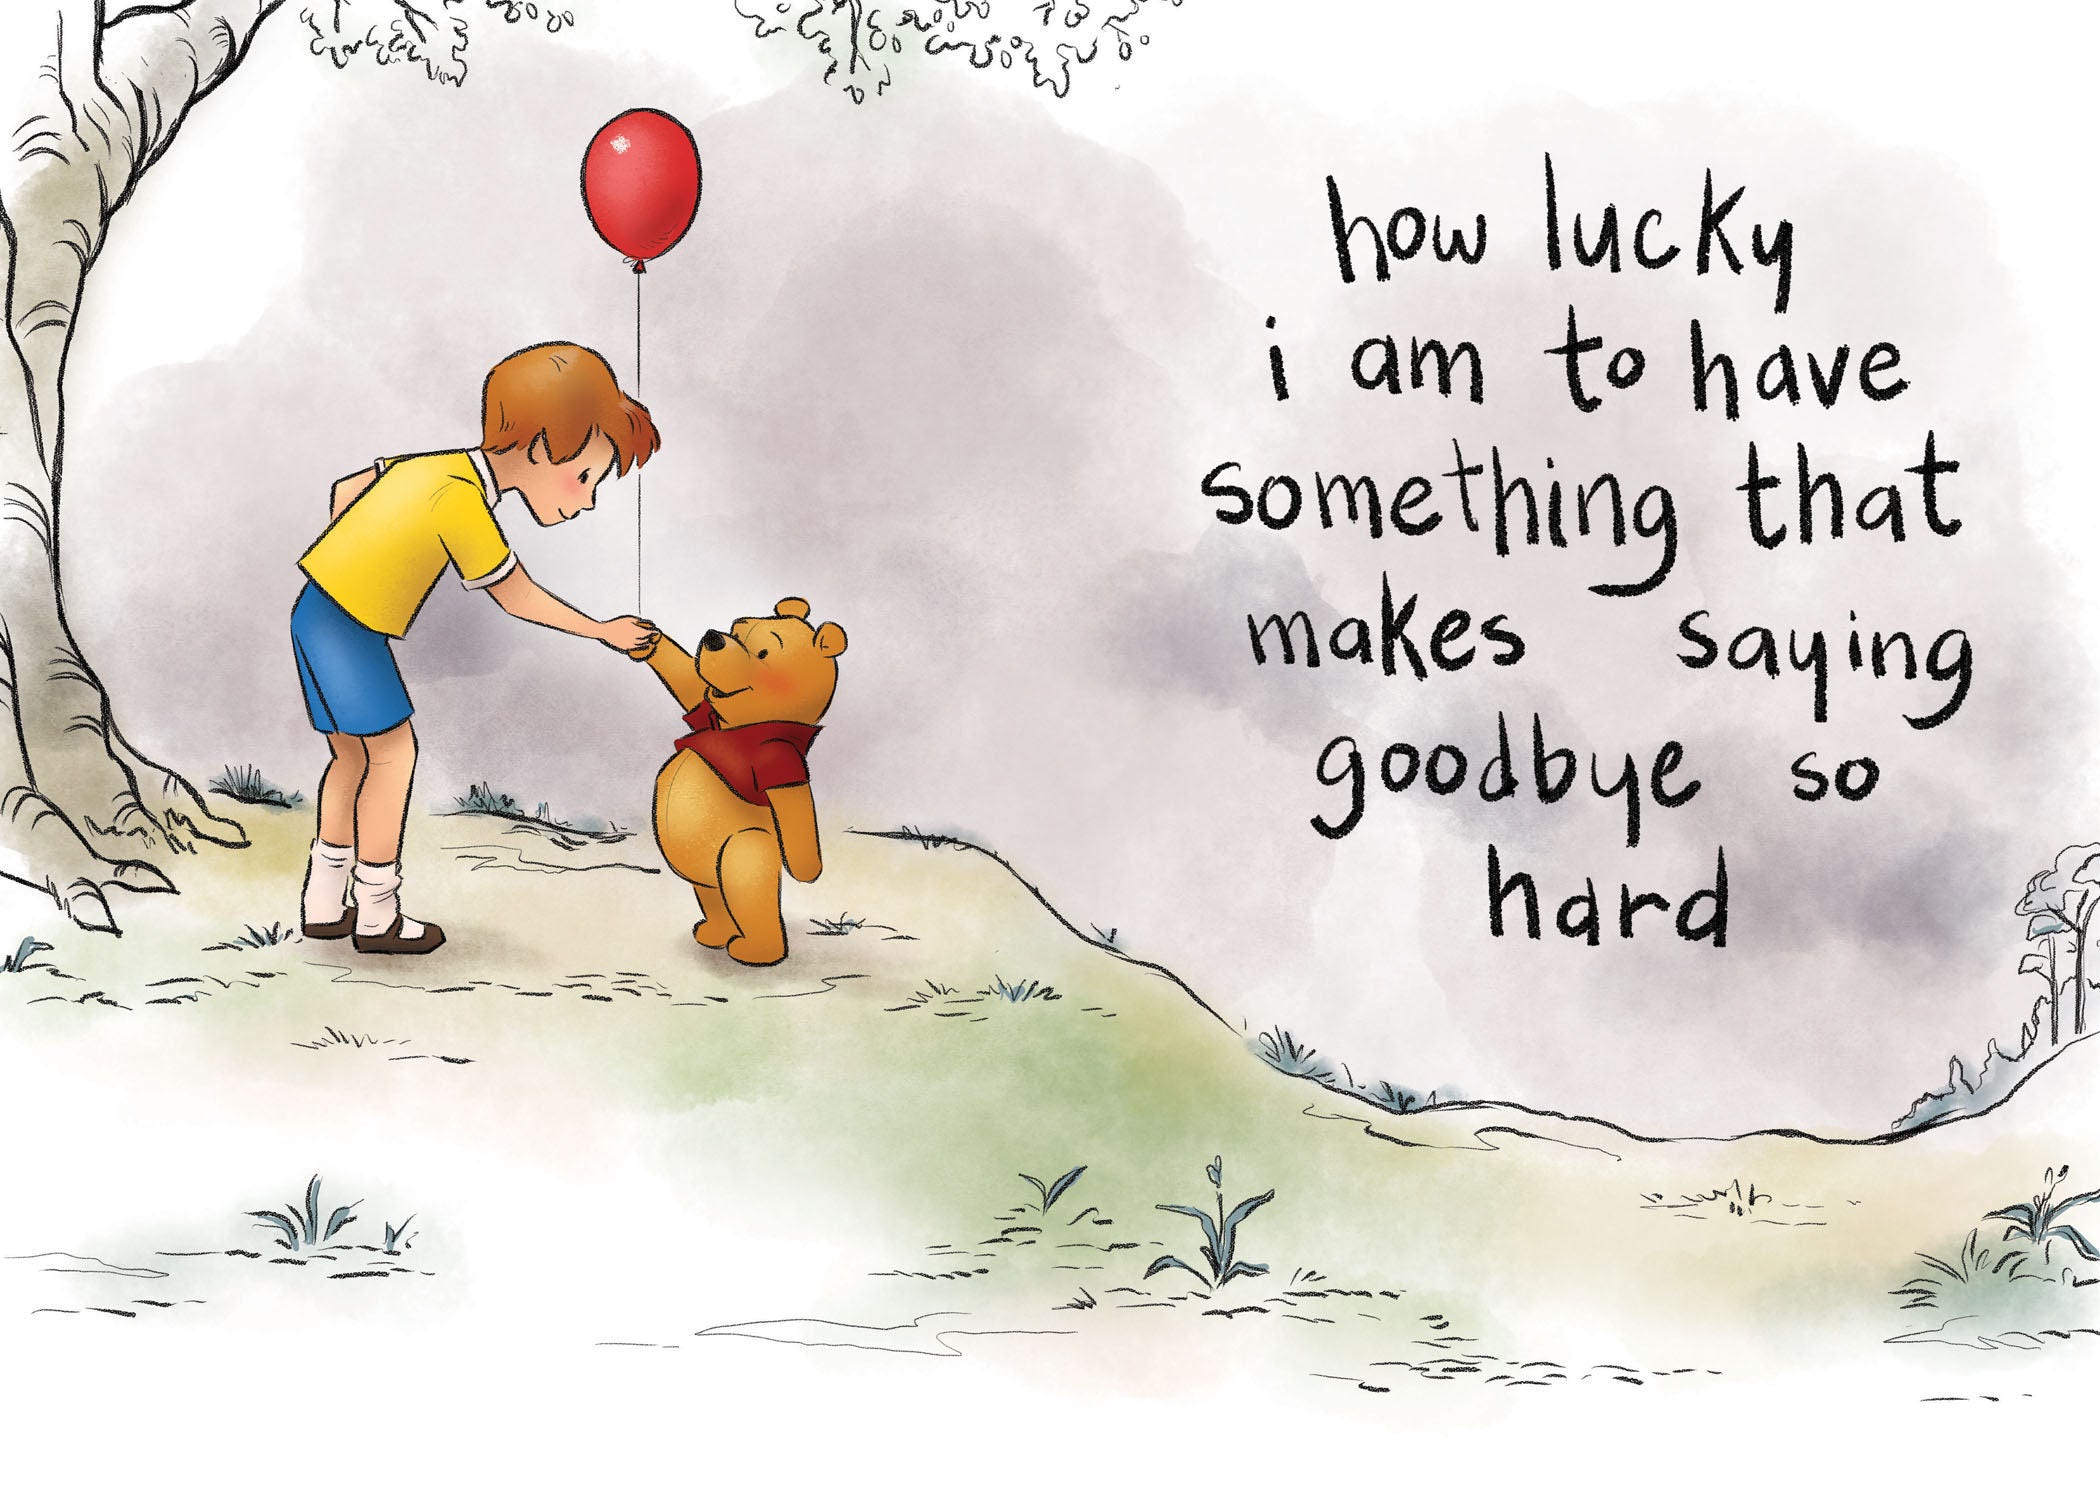 Winnie the Pooh says something